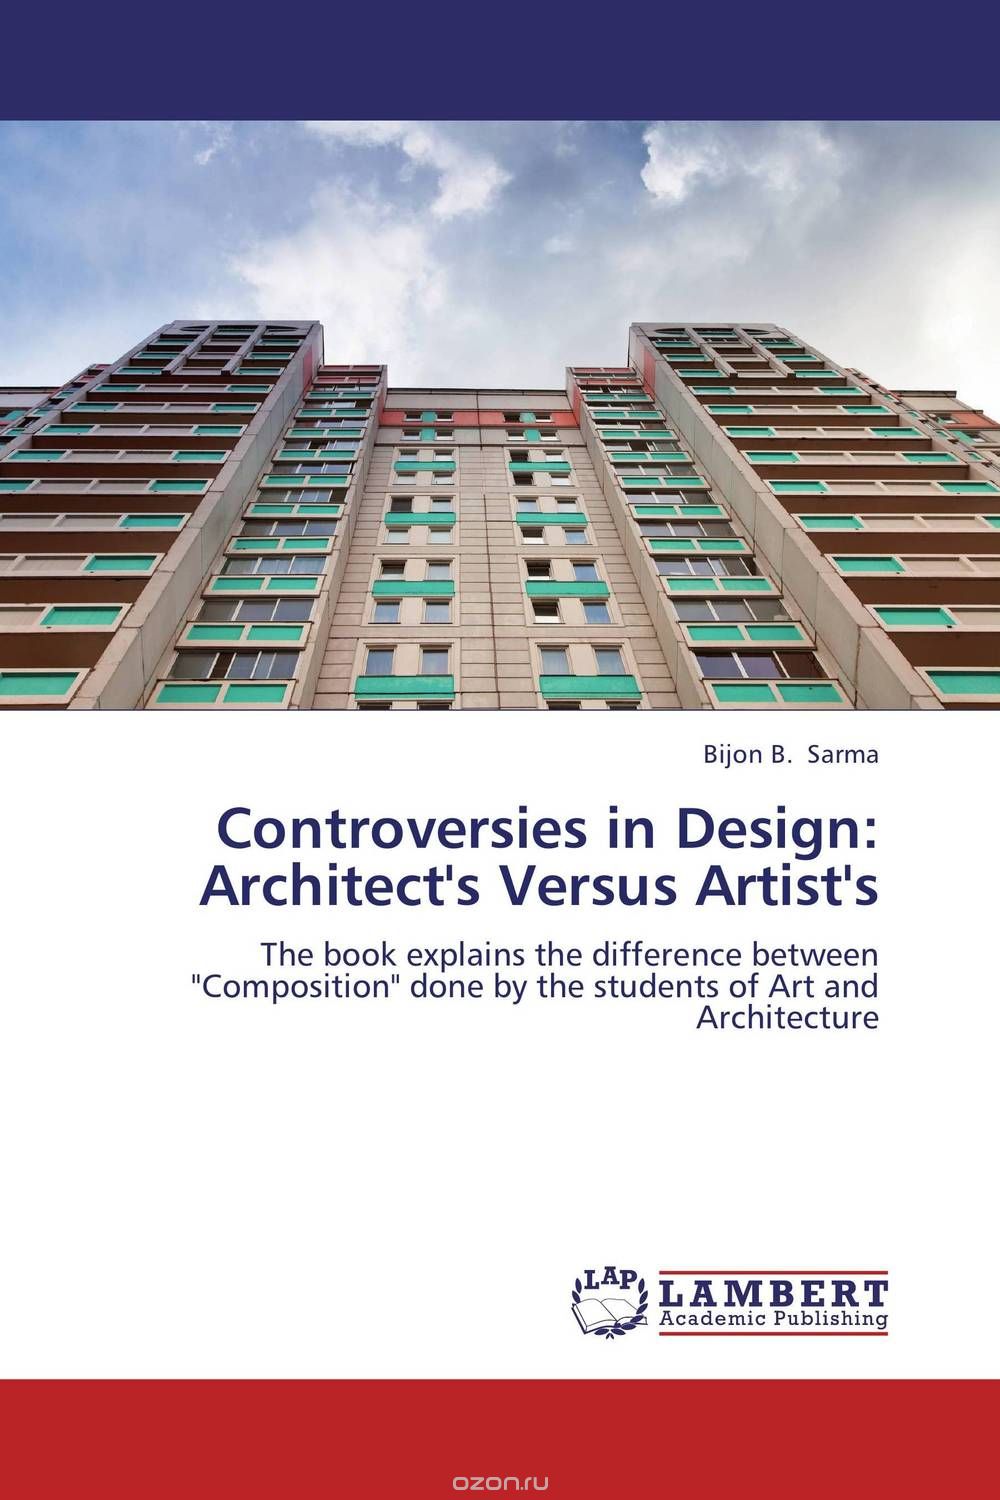 Скачать книгу "Controversies in Design: Architect's Versus Artist's"